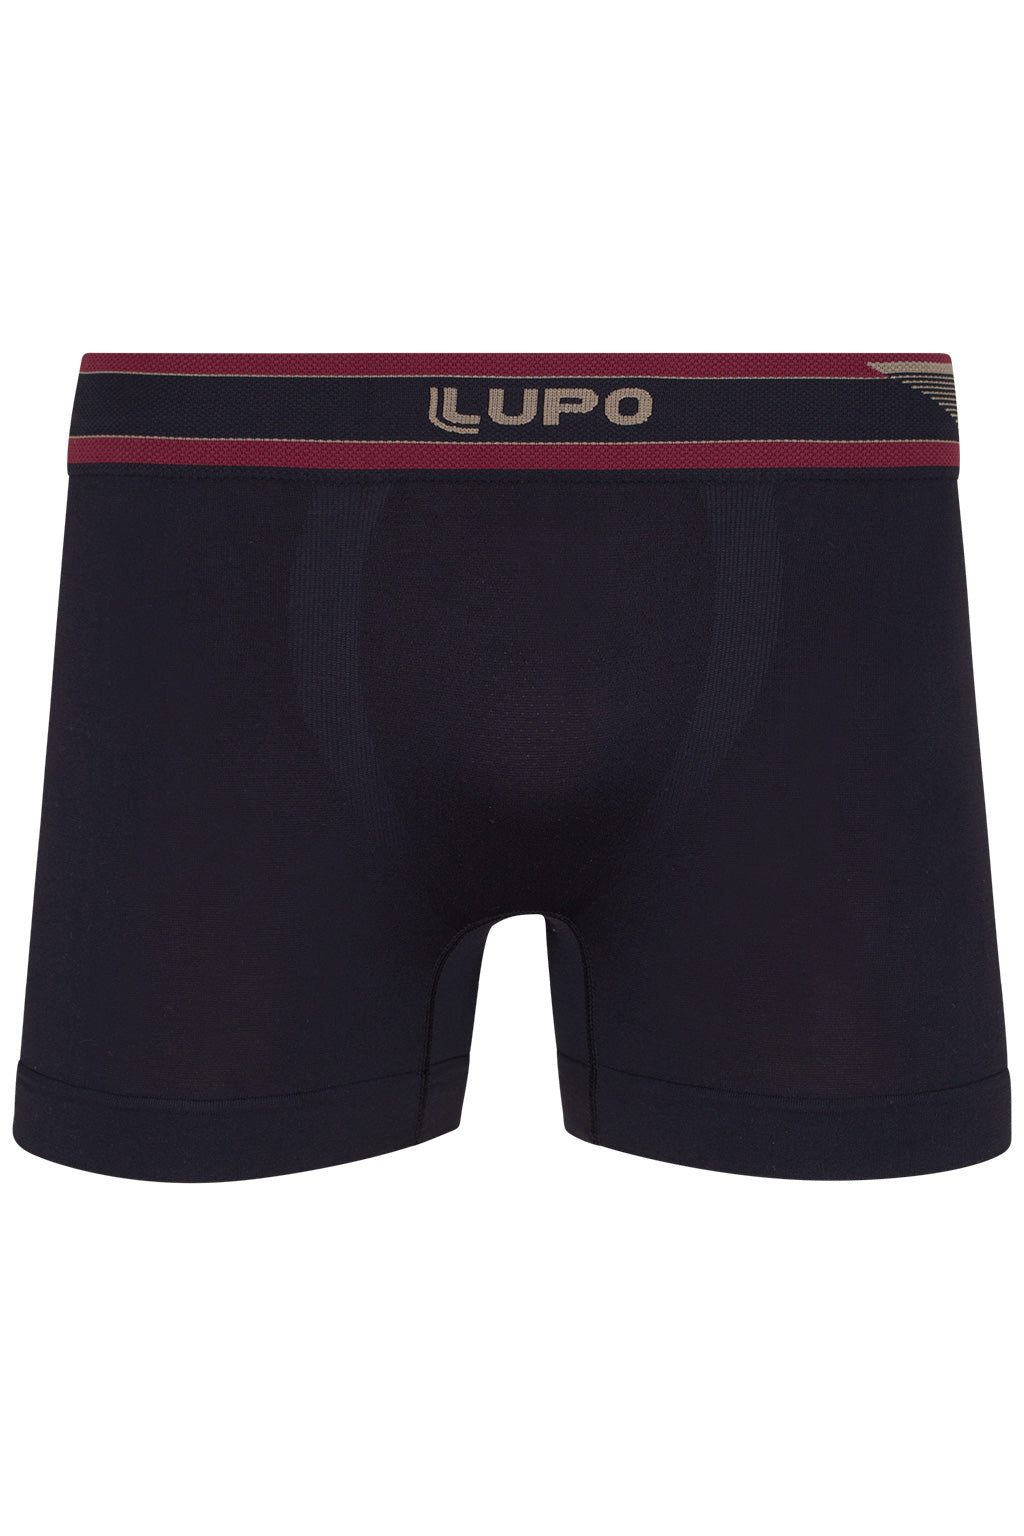 Microfiber Seamless Ribbed Underwear Boxer Briefs for Men